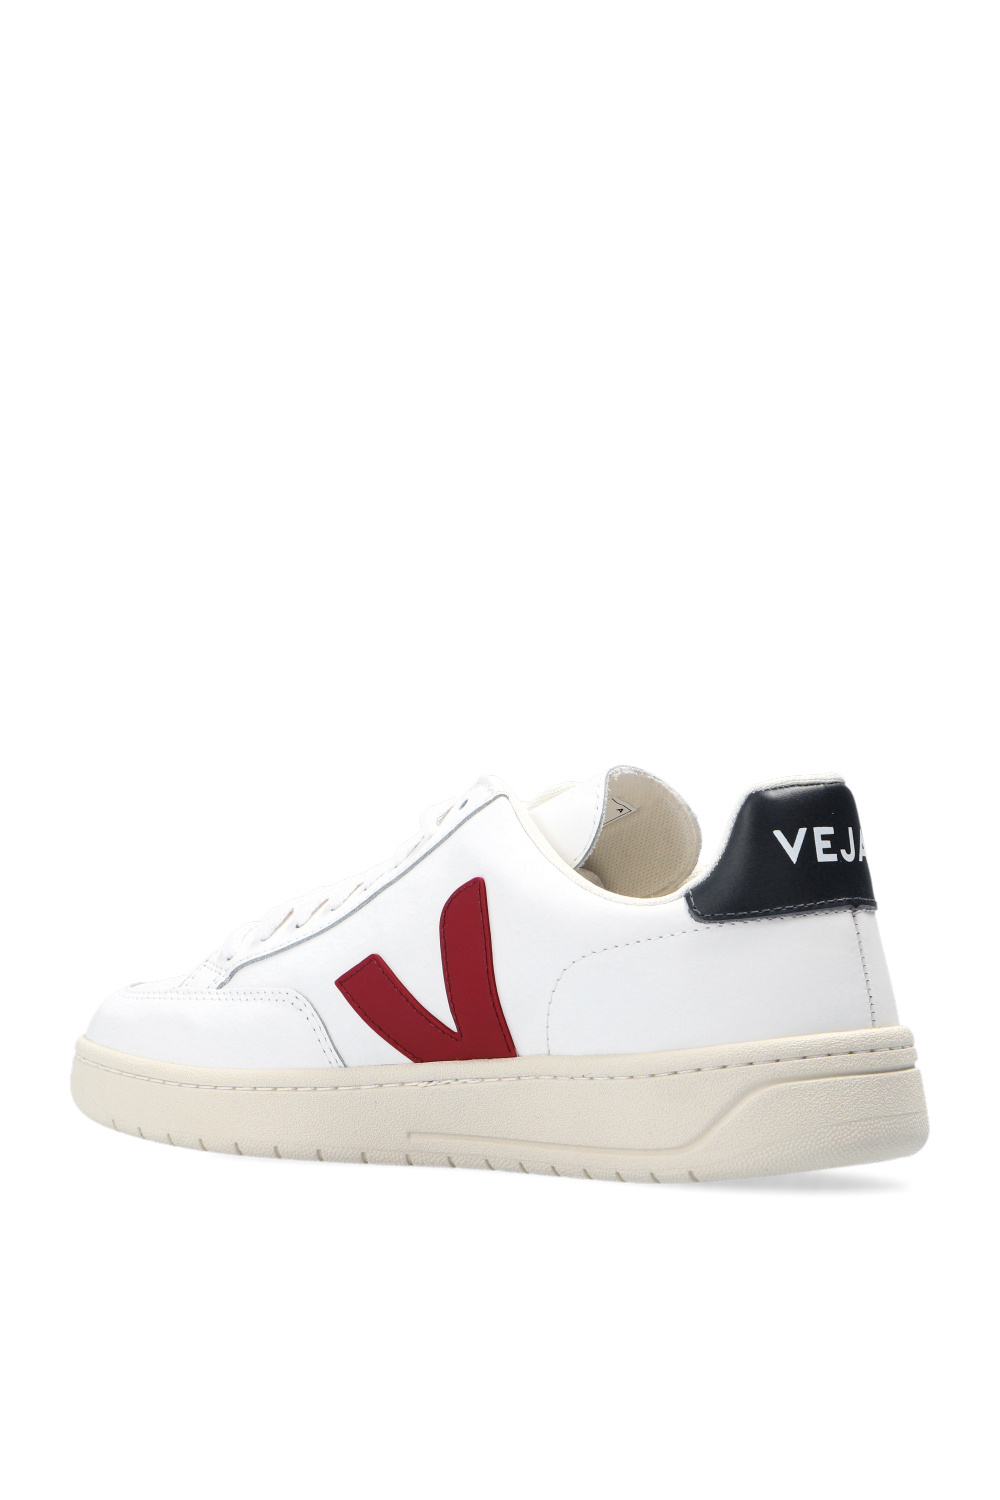 veja sneakers ‘V-12 Leather’ sneakers